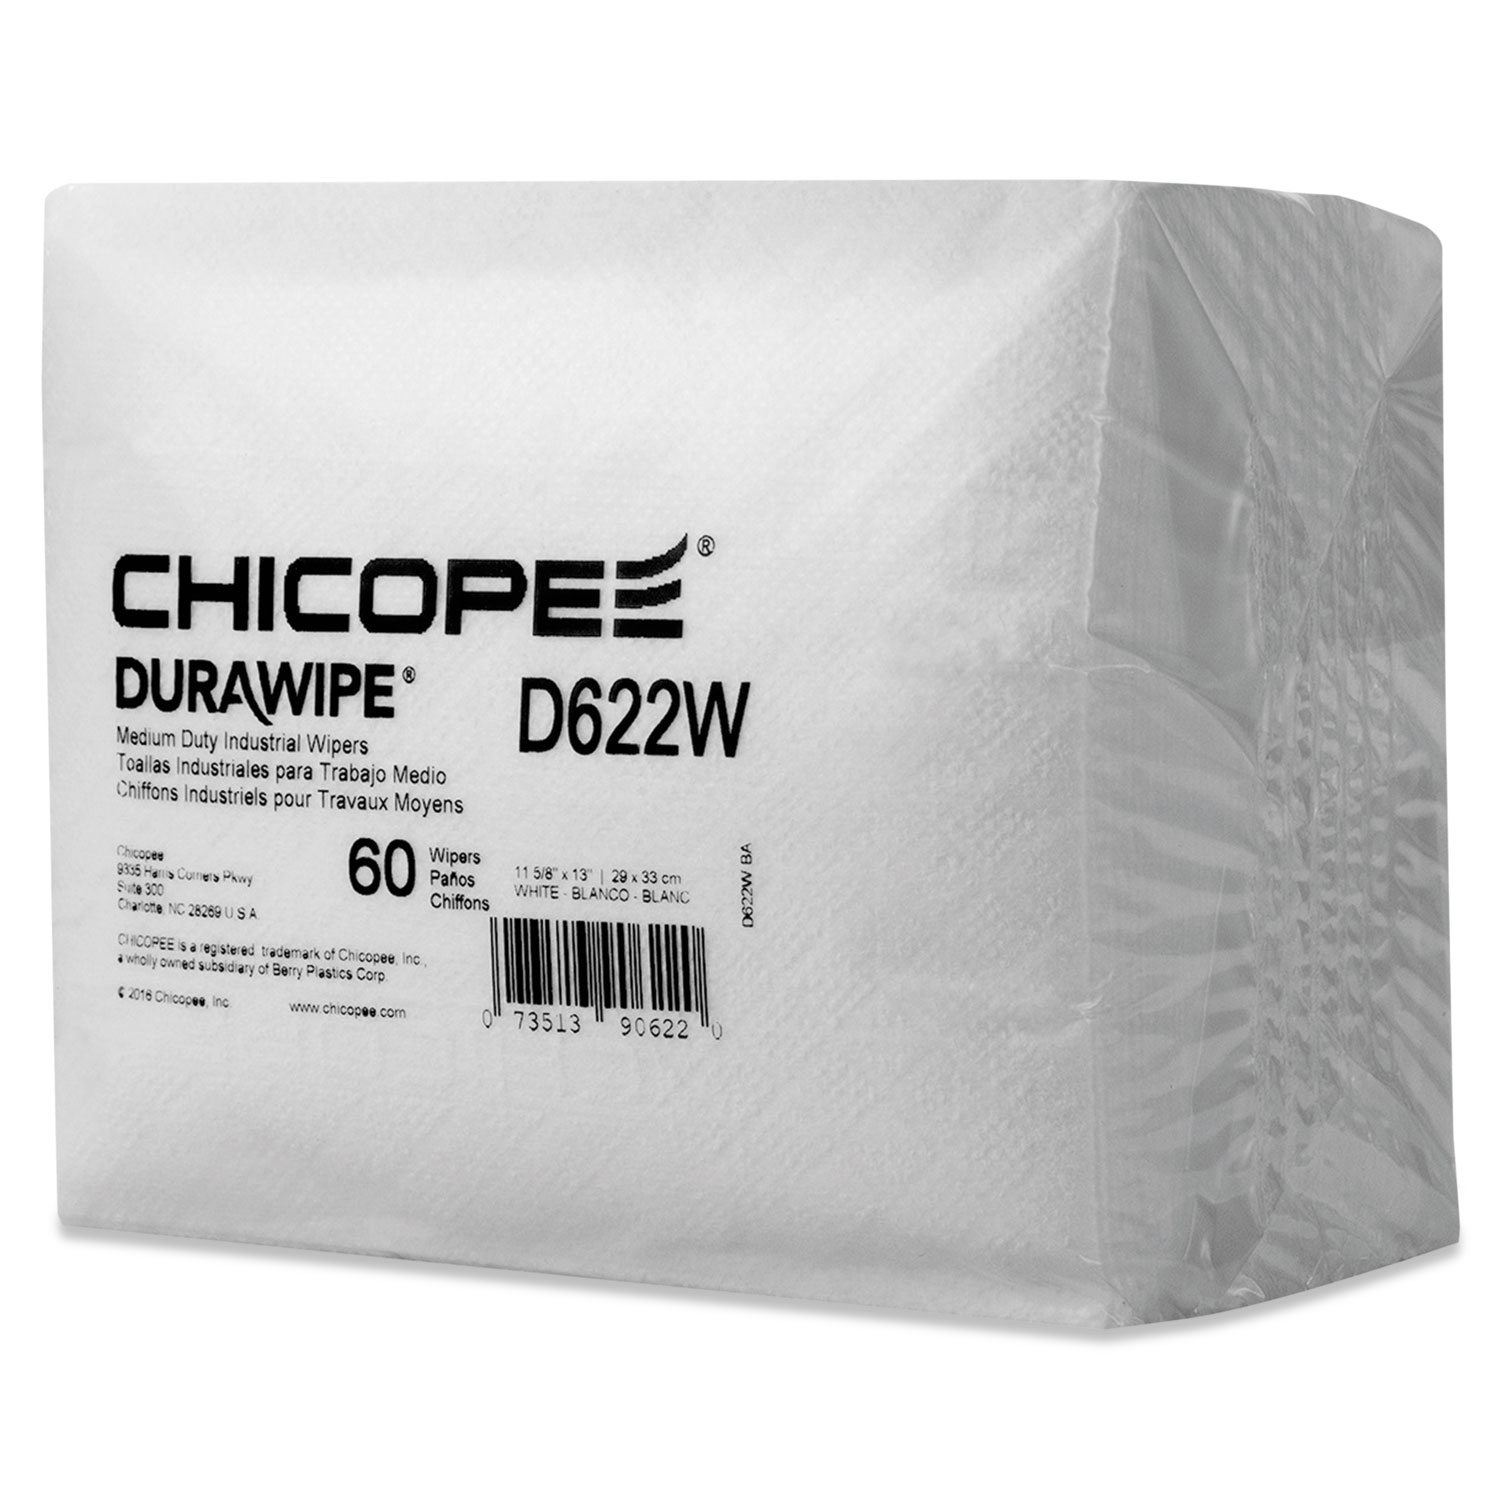 Durawipe Medium-Duty Industrial Wipers, 11.6 x 13, White, 60/Pack, 16Pk/Carton